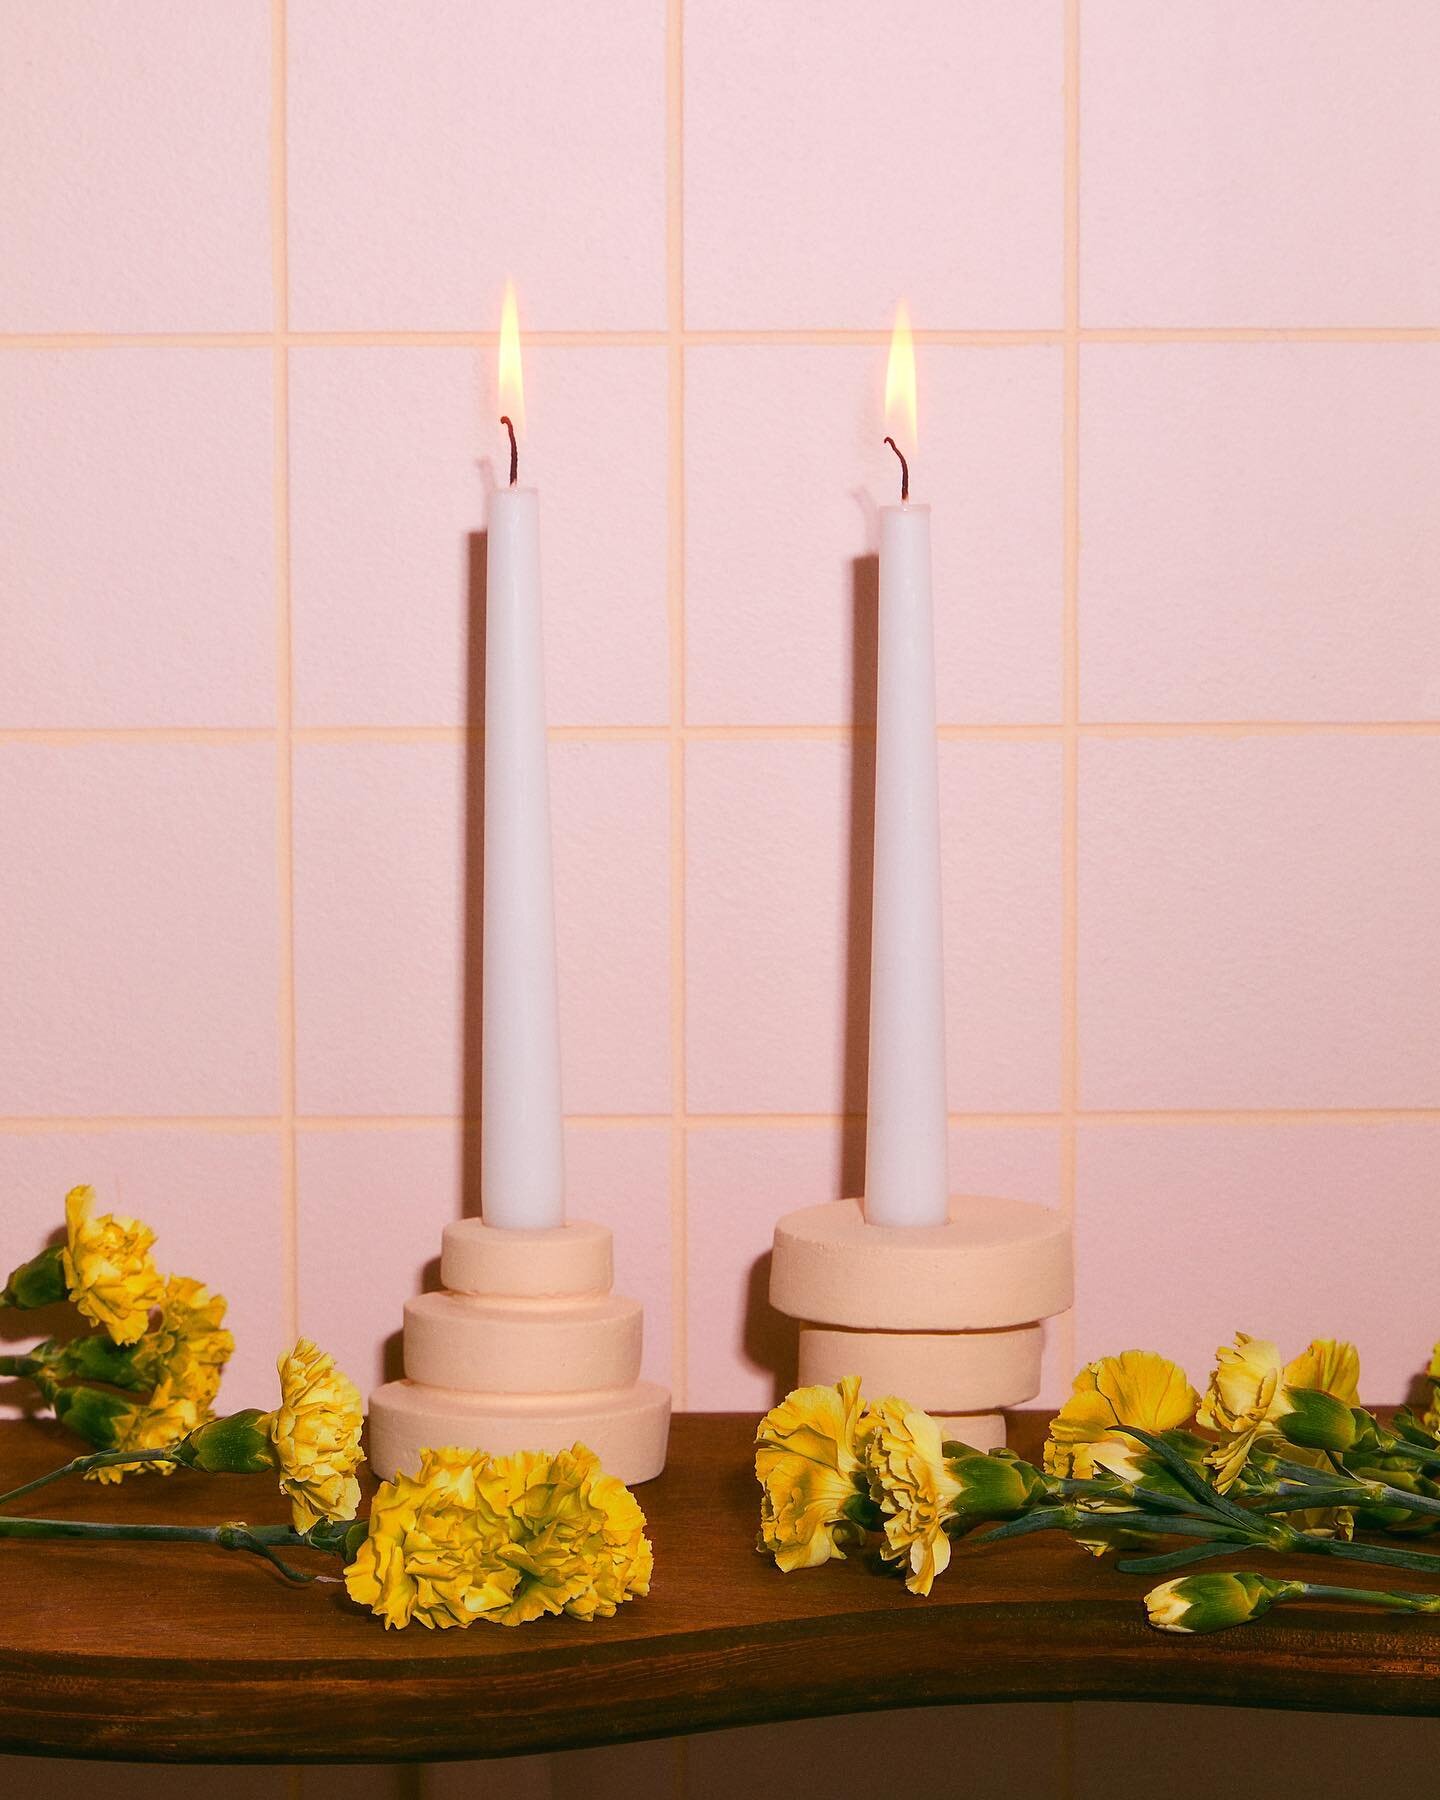 Allow us to set the mood 🔥🔥🔥

.
.
.
.
.
#clay #ceramics #handmade #tubular #candles #candleholderdesign #candleholder #light #lighting #candle #lit #roomdecor #smallbusiness #discover #homedecor #home #newyork #losangeles #la #discoverunder5k #hom